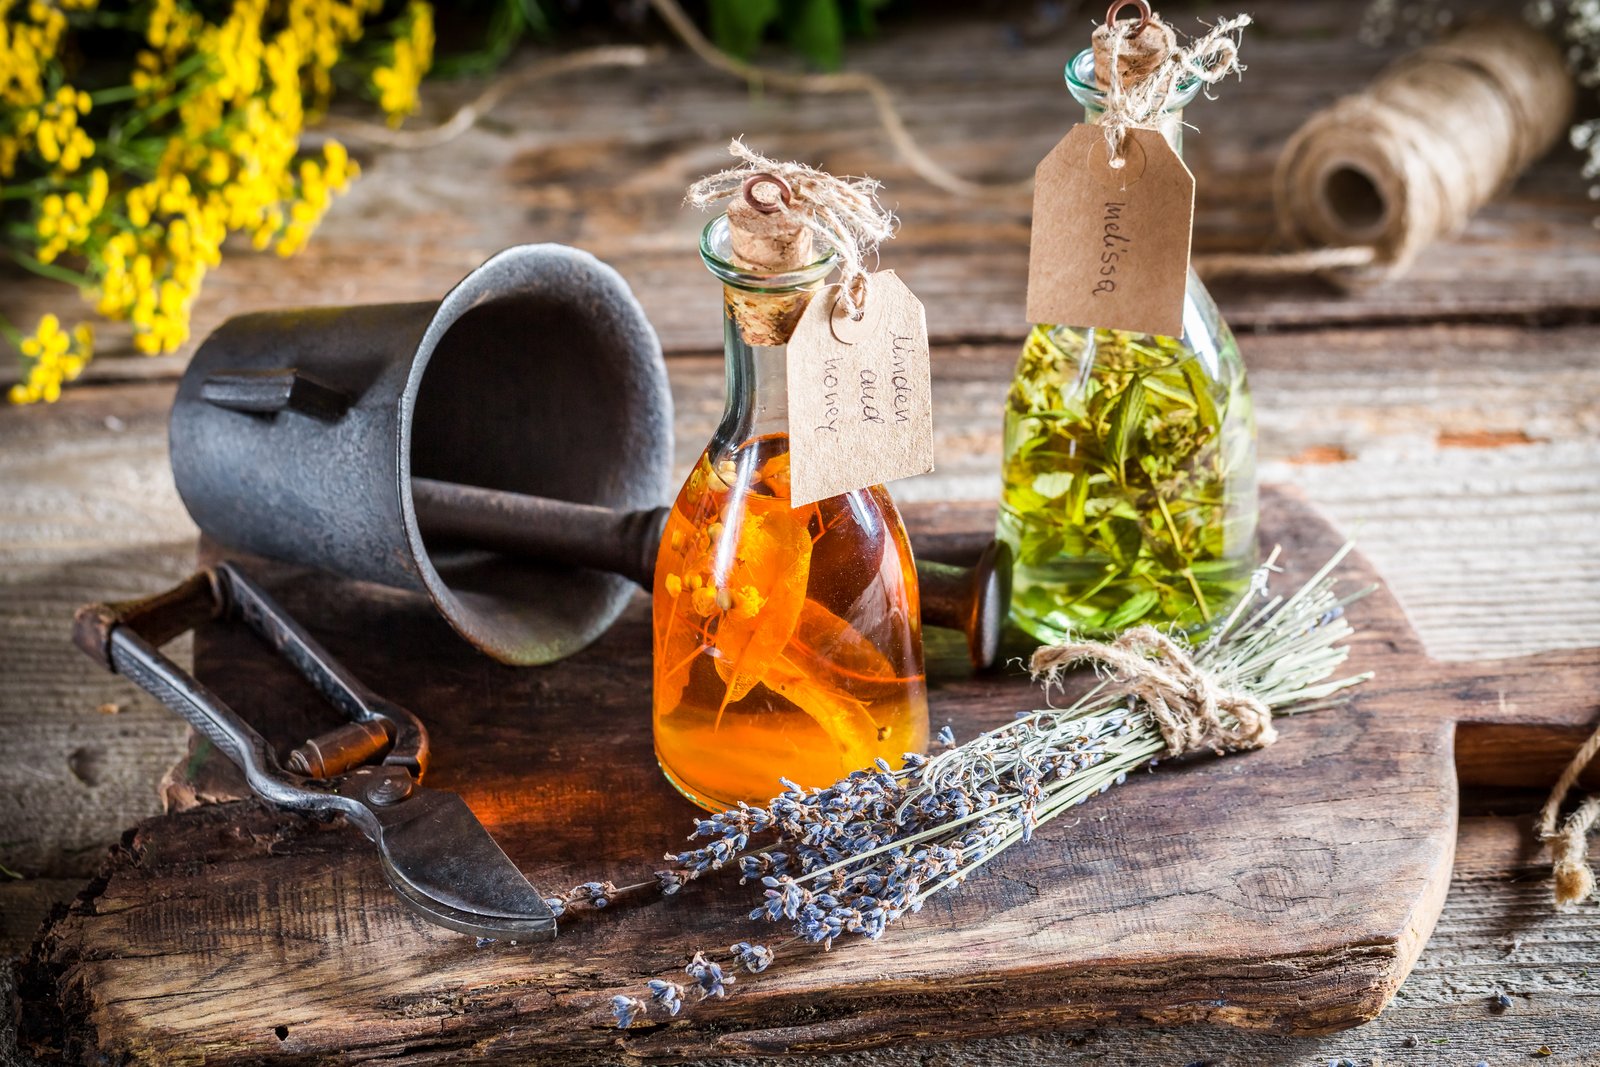 Homemade herbs in bottles as natural medicine